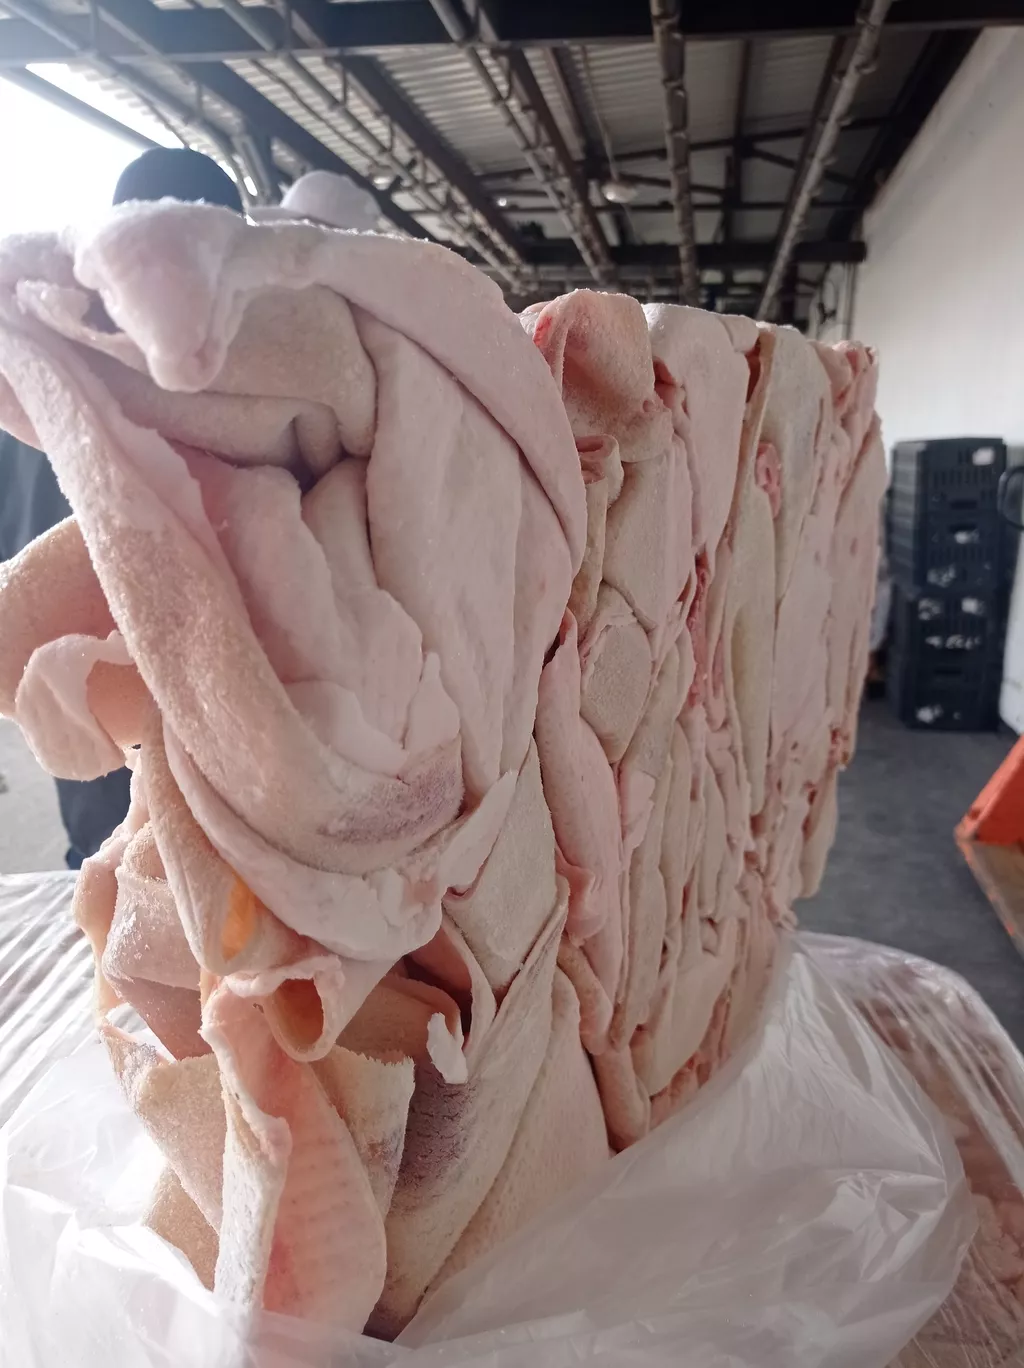 шкурка пластовая свиная  в Омске и Омской области 2